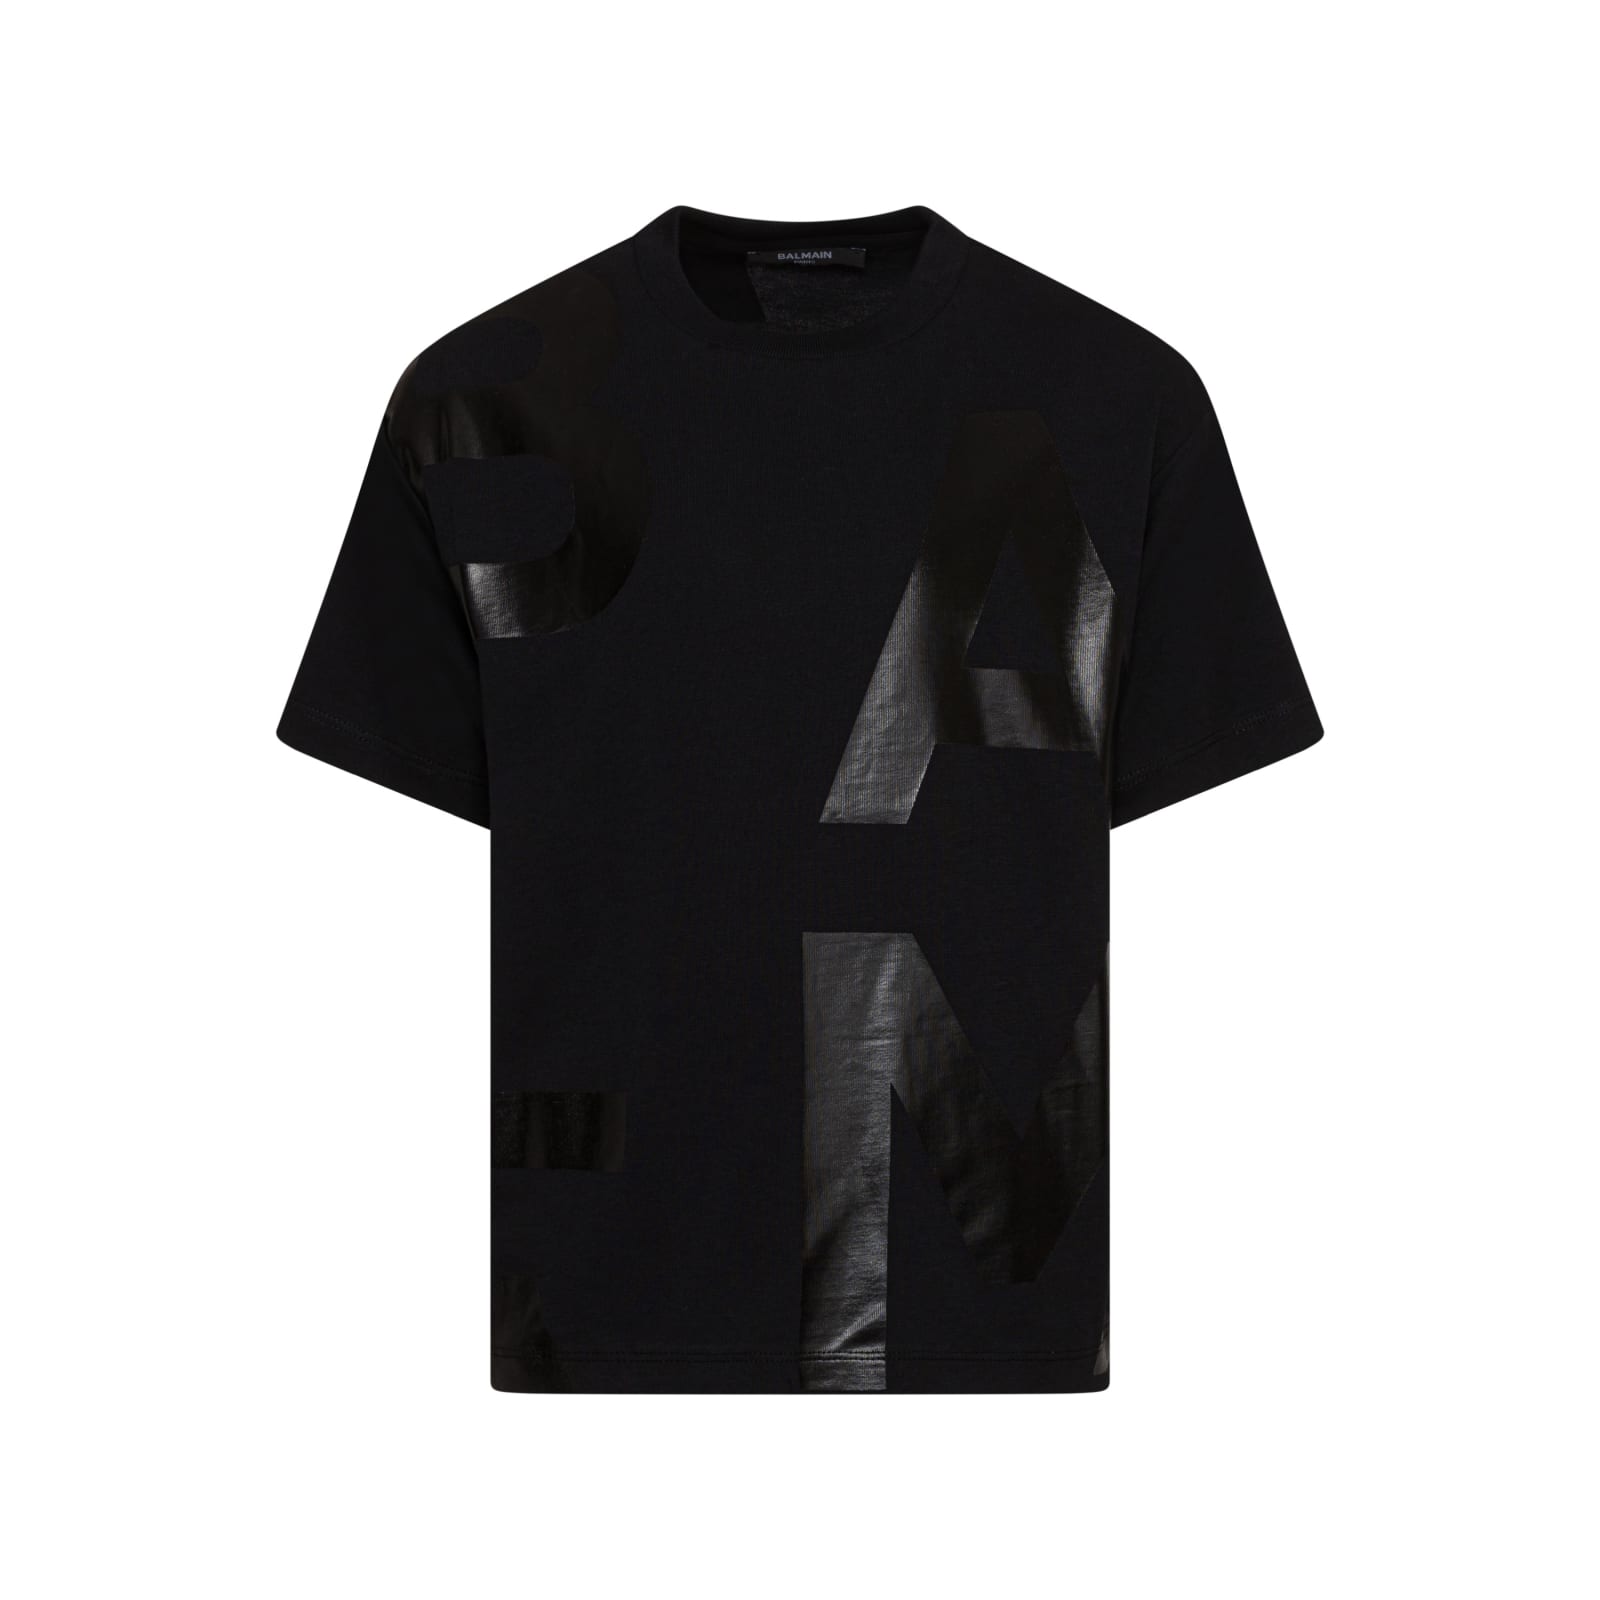 Balmain Kids' T-shirt With Print In Black